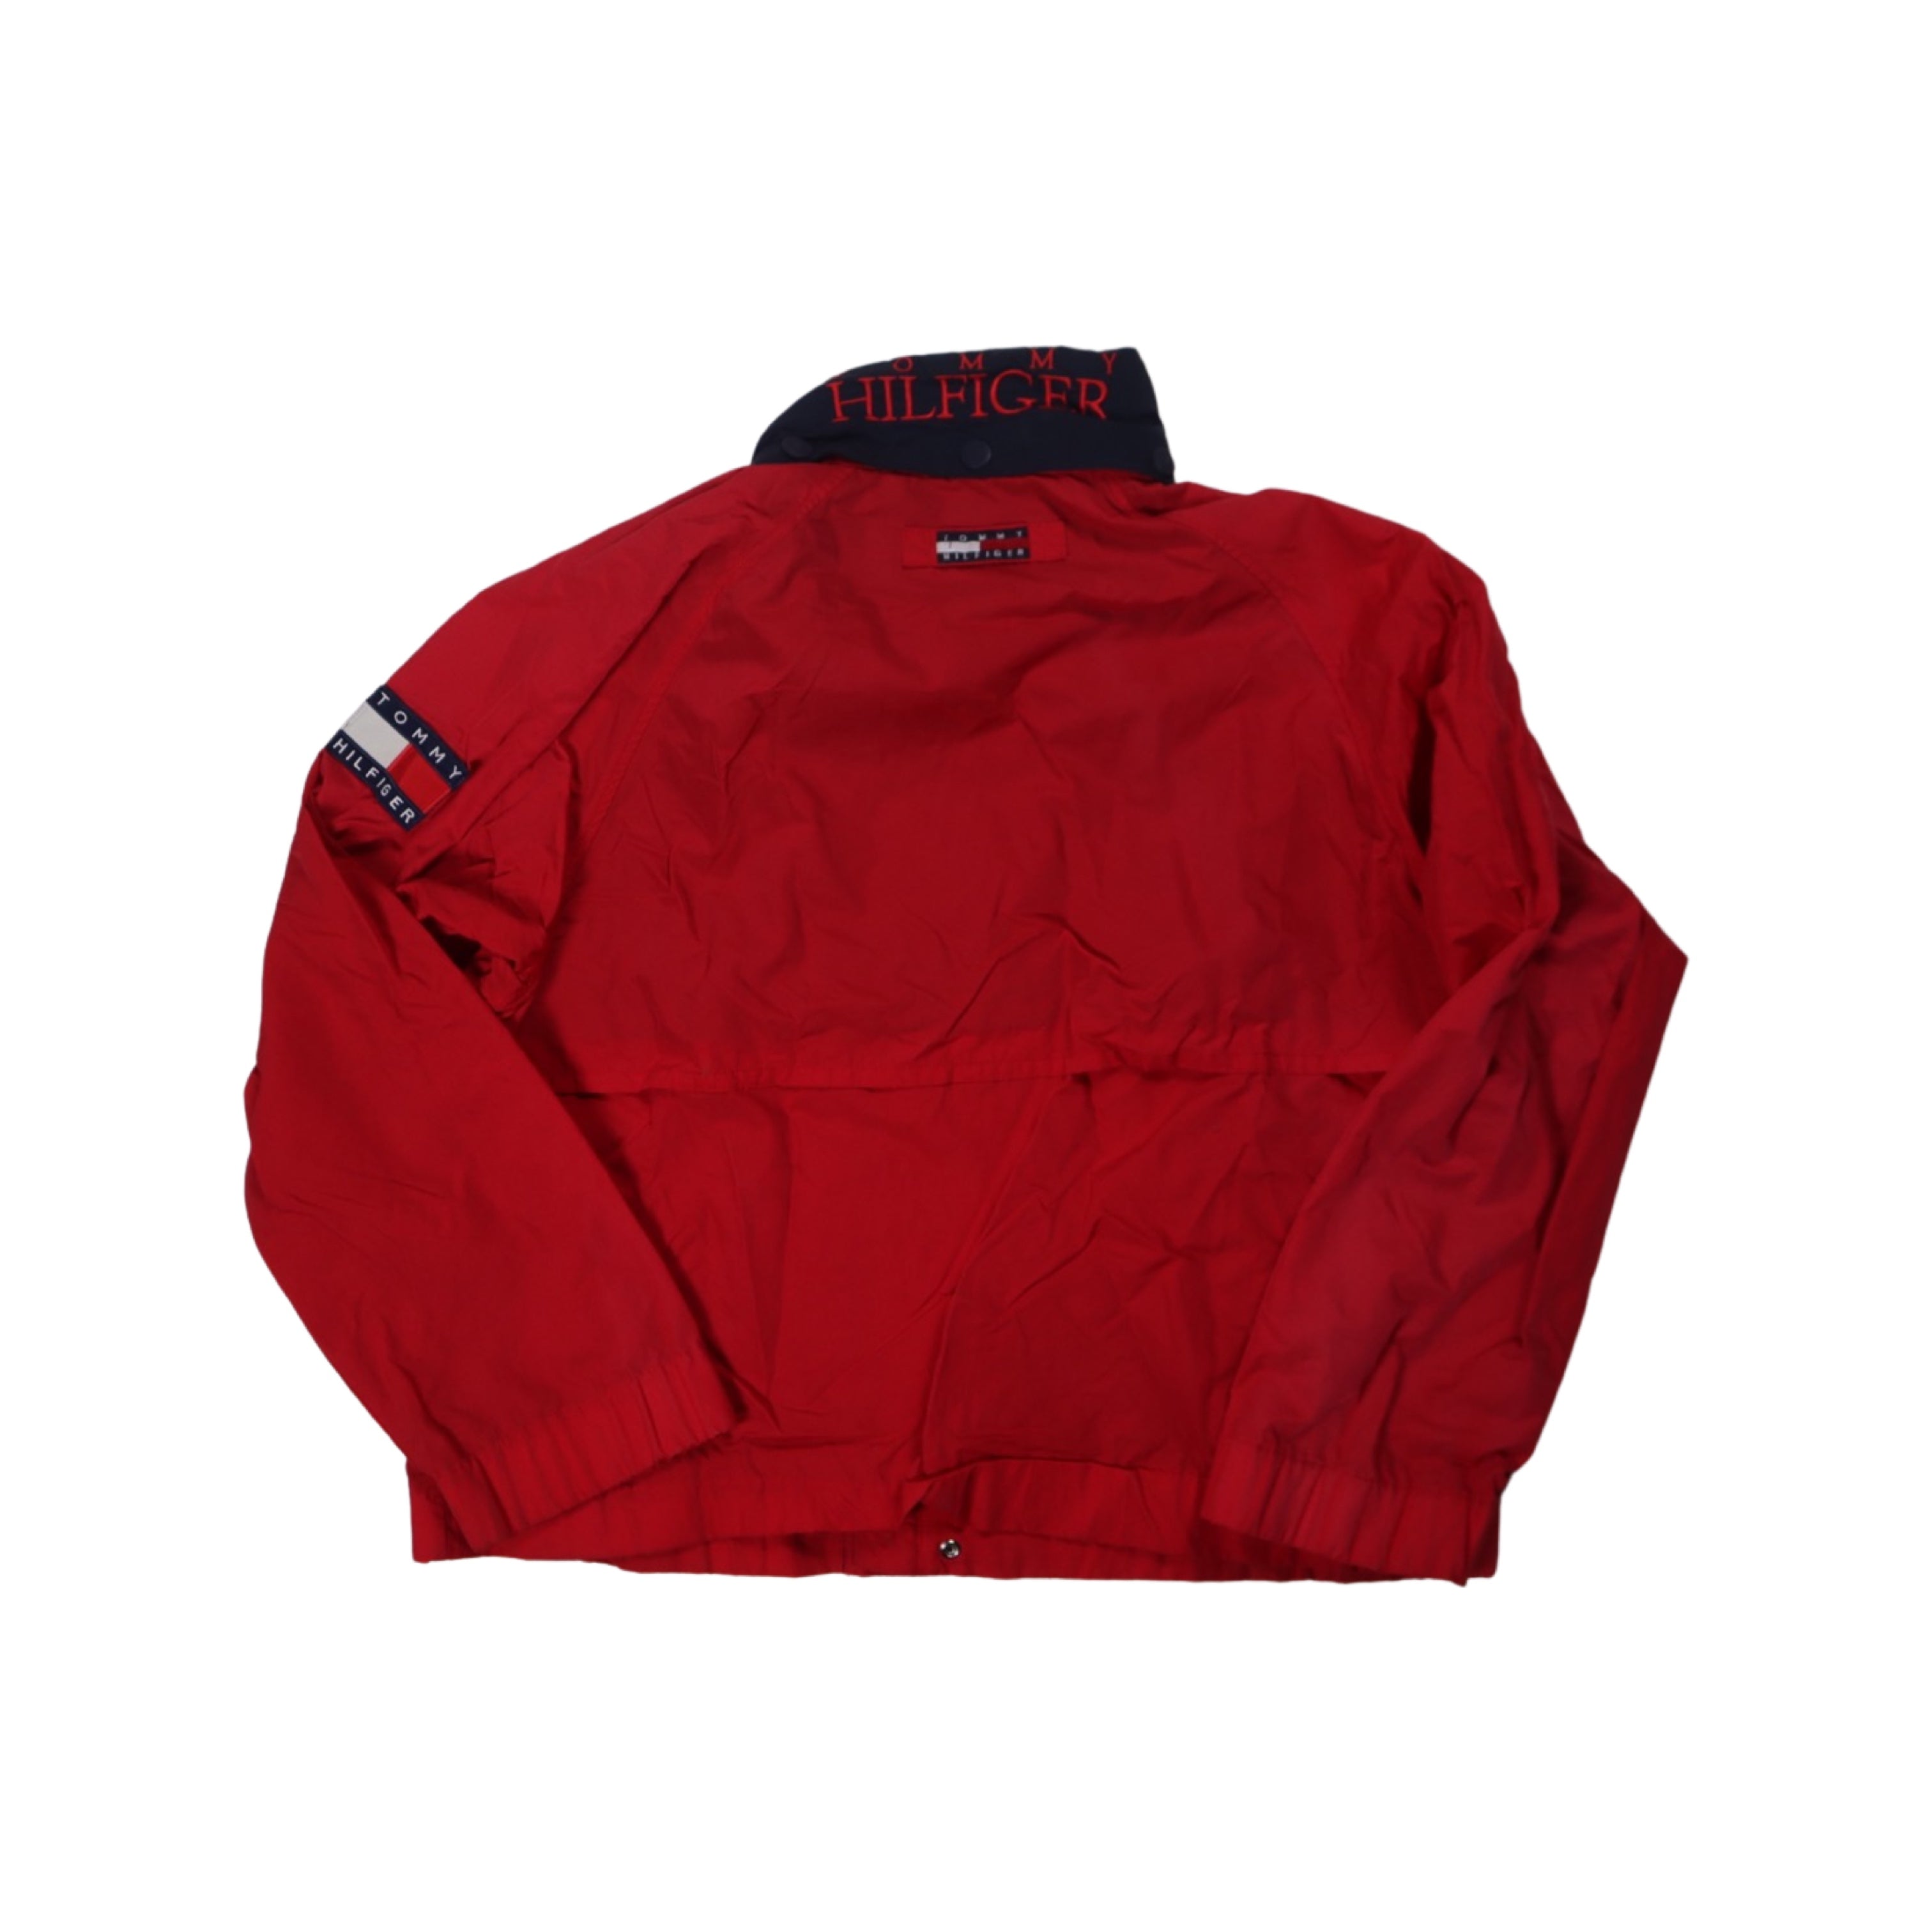 Red Tommy Hilfiger Rain Jacket 90s (XL)